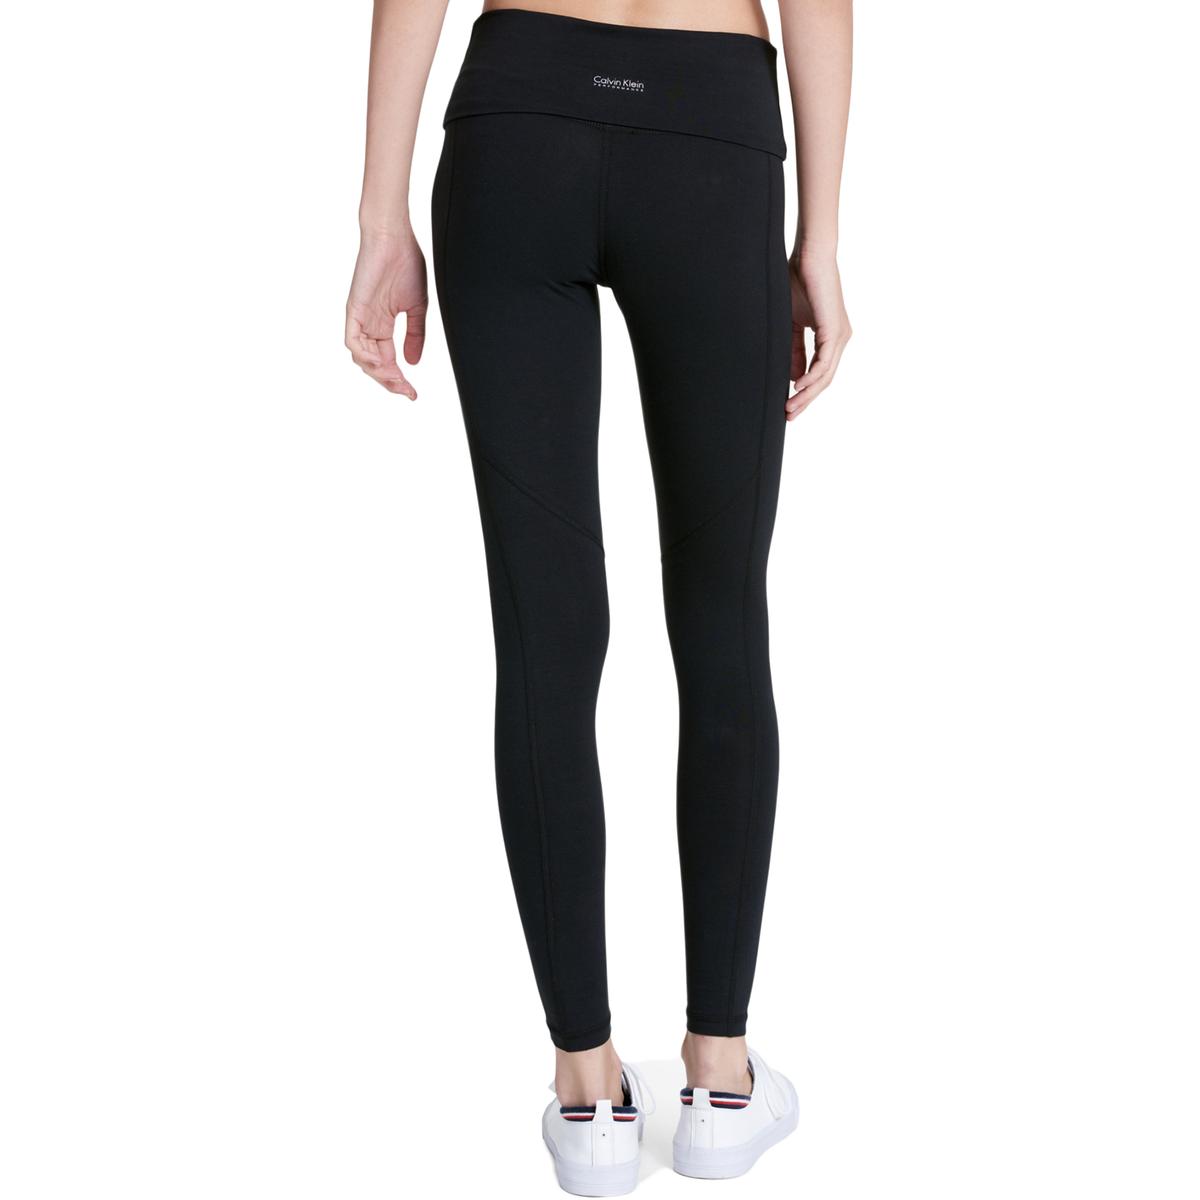 DKNY Hug & Lift Seamless Women's Leggings with Pockets, Black at   Women's Clothing store